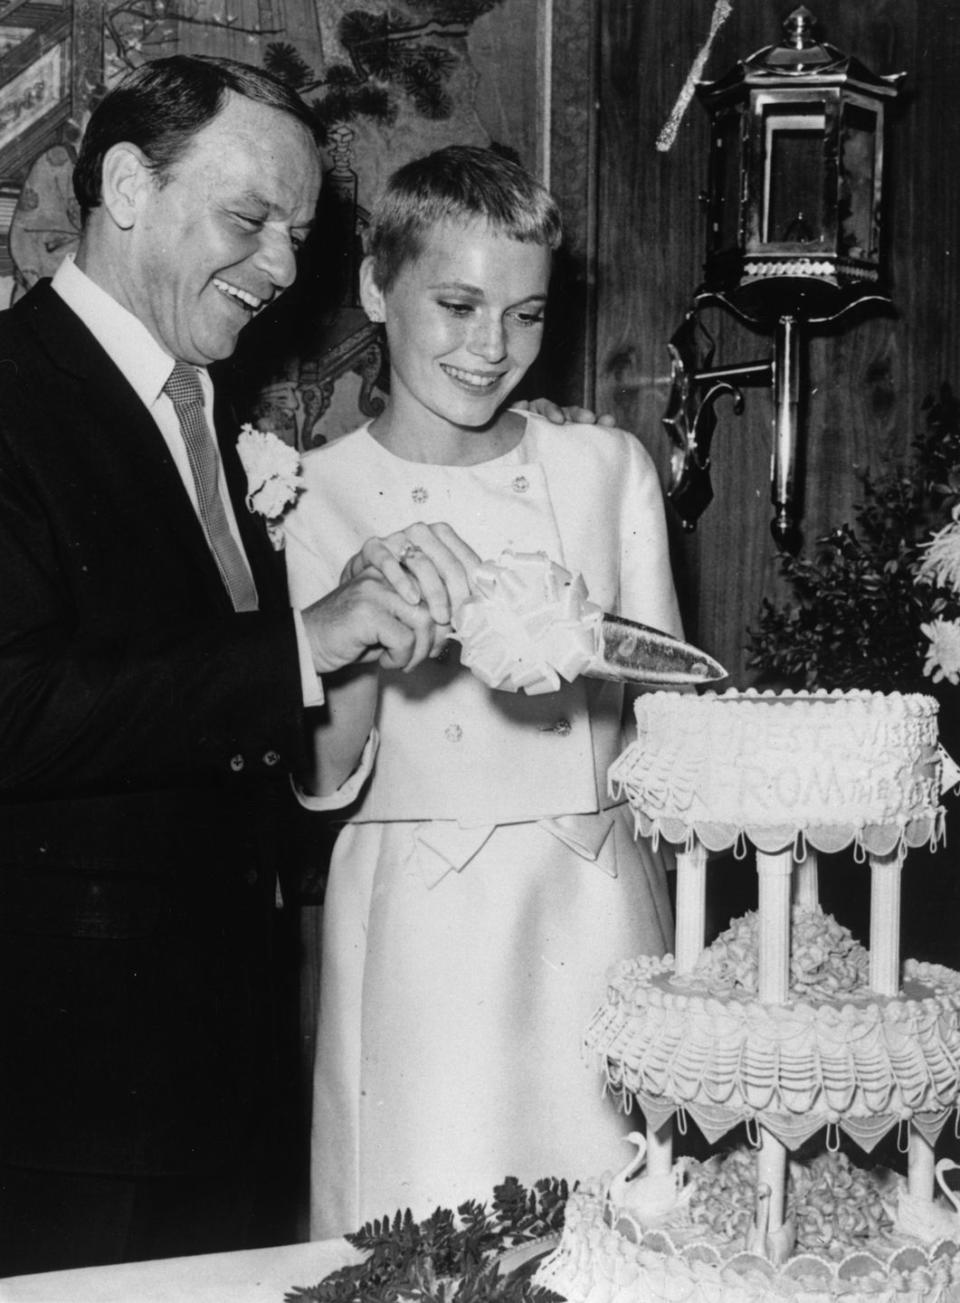 1966: Marrying Frank Sinatra